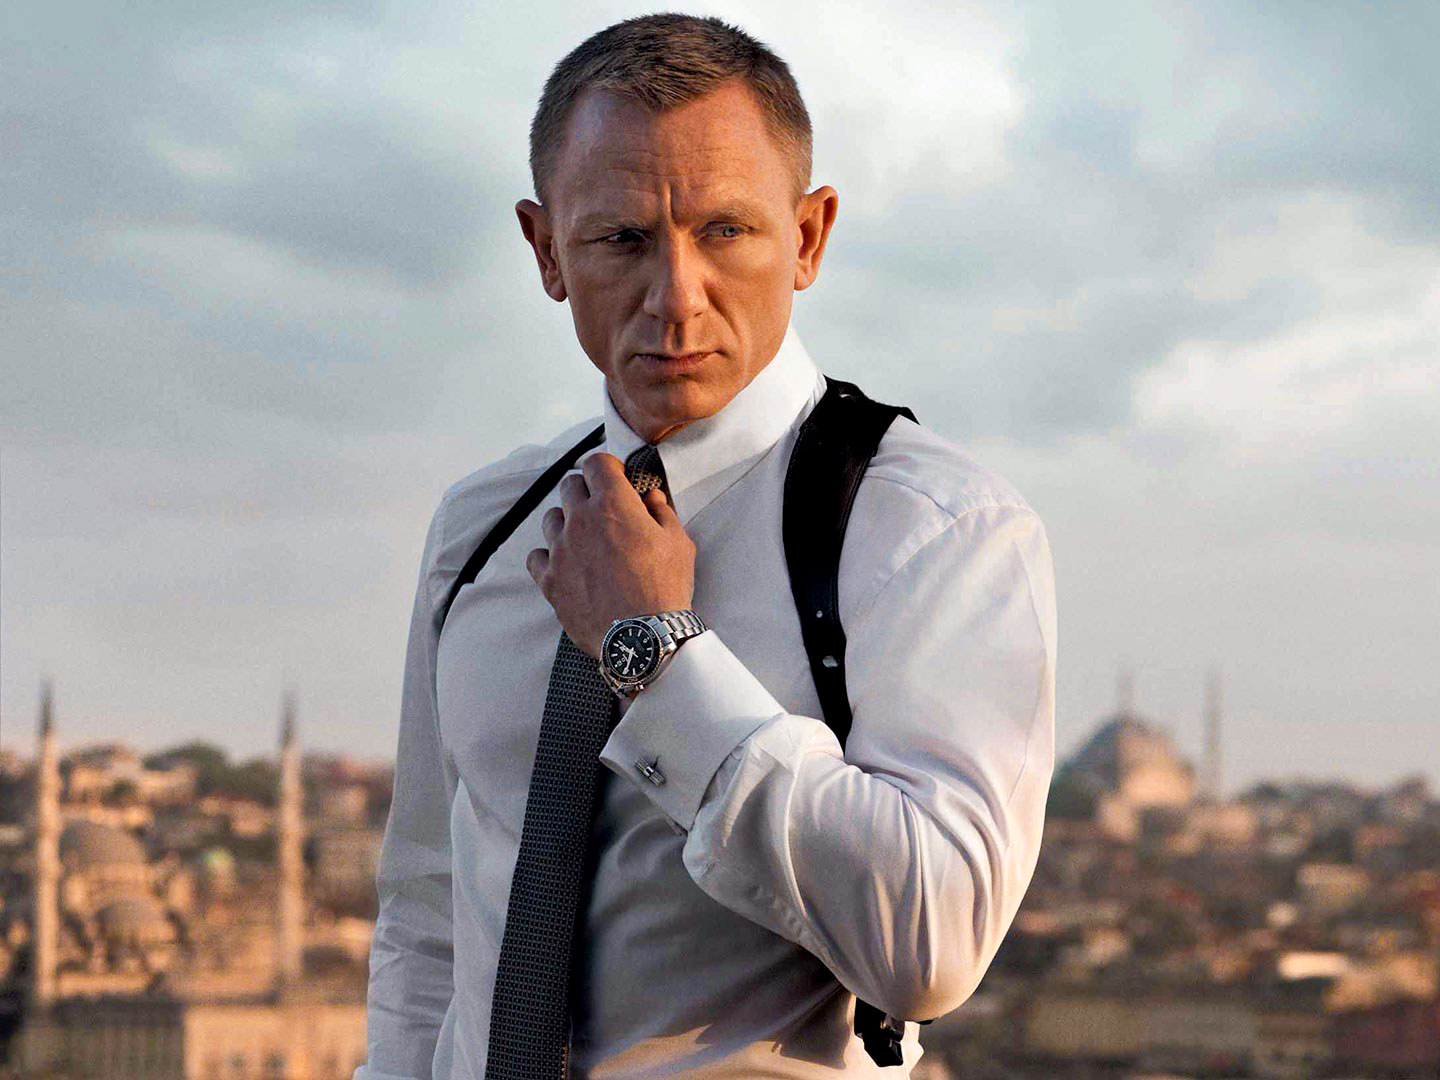 James Bond in a white dress shirt